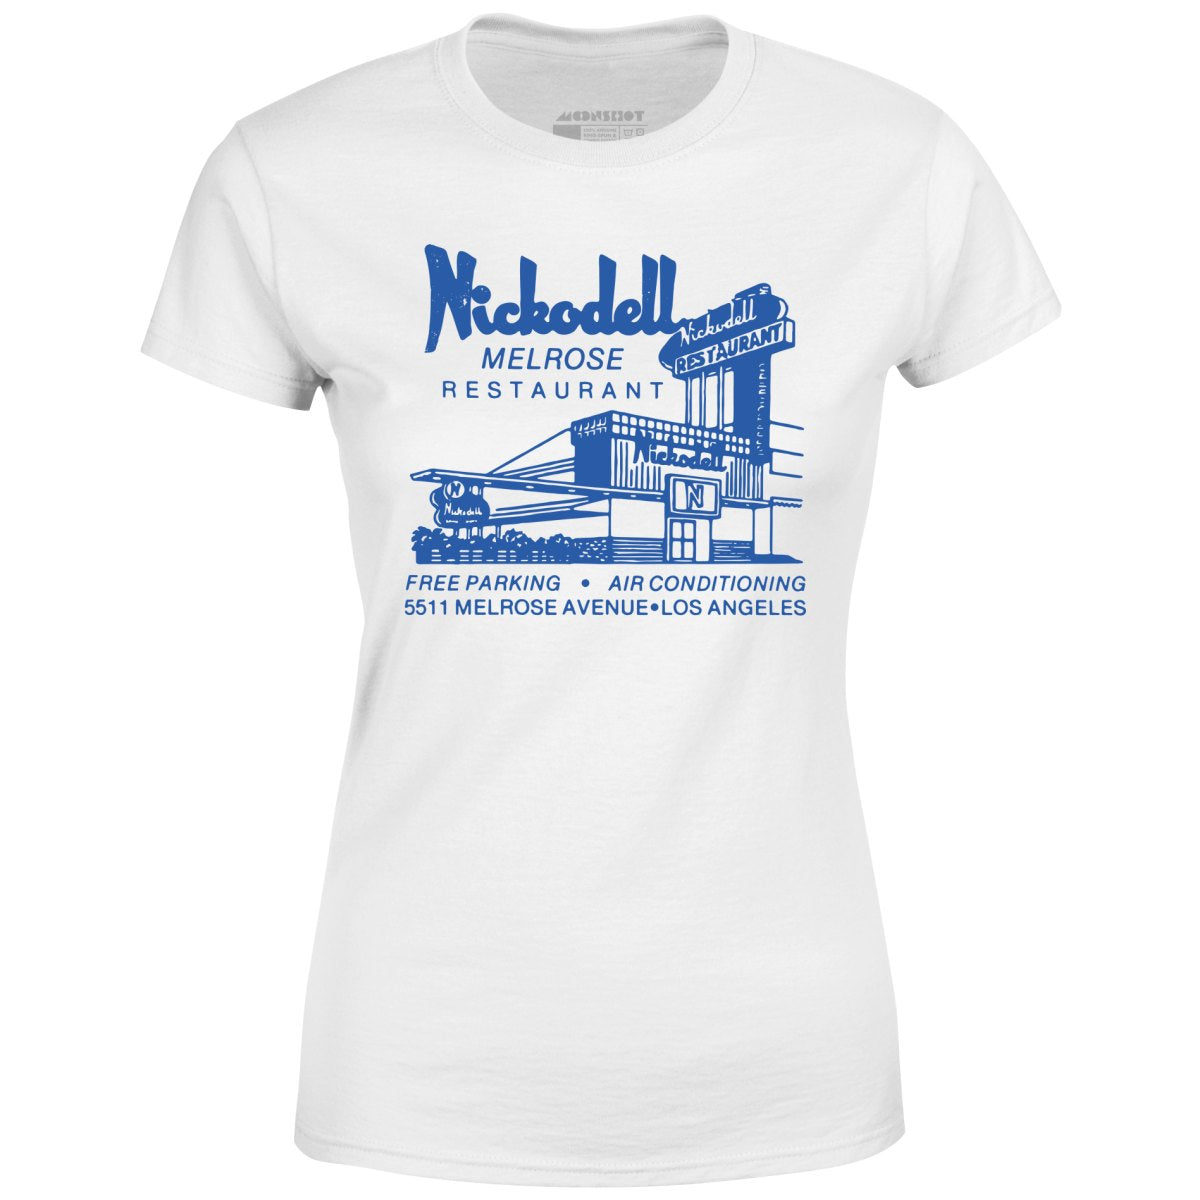 Nickodell - Los Angeles, CA - Vintage Restaurant - Women's T-Shirt